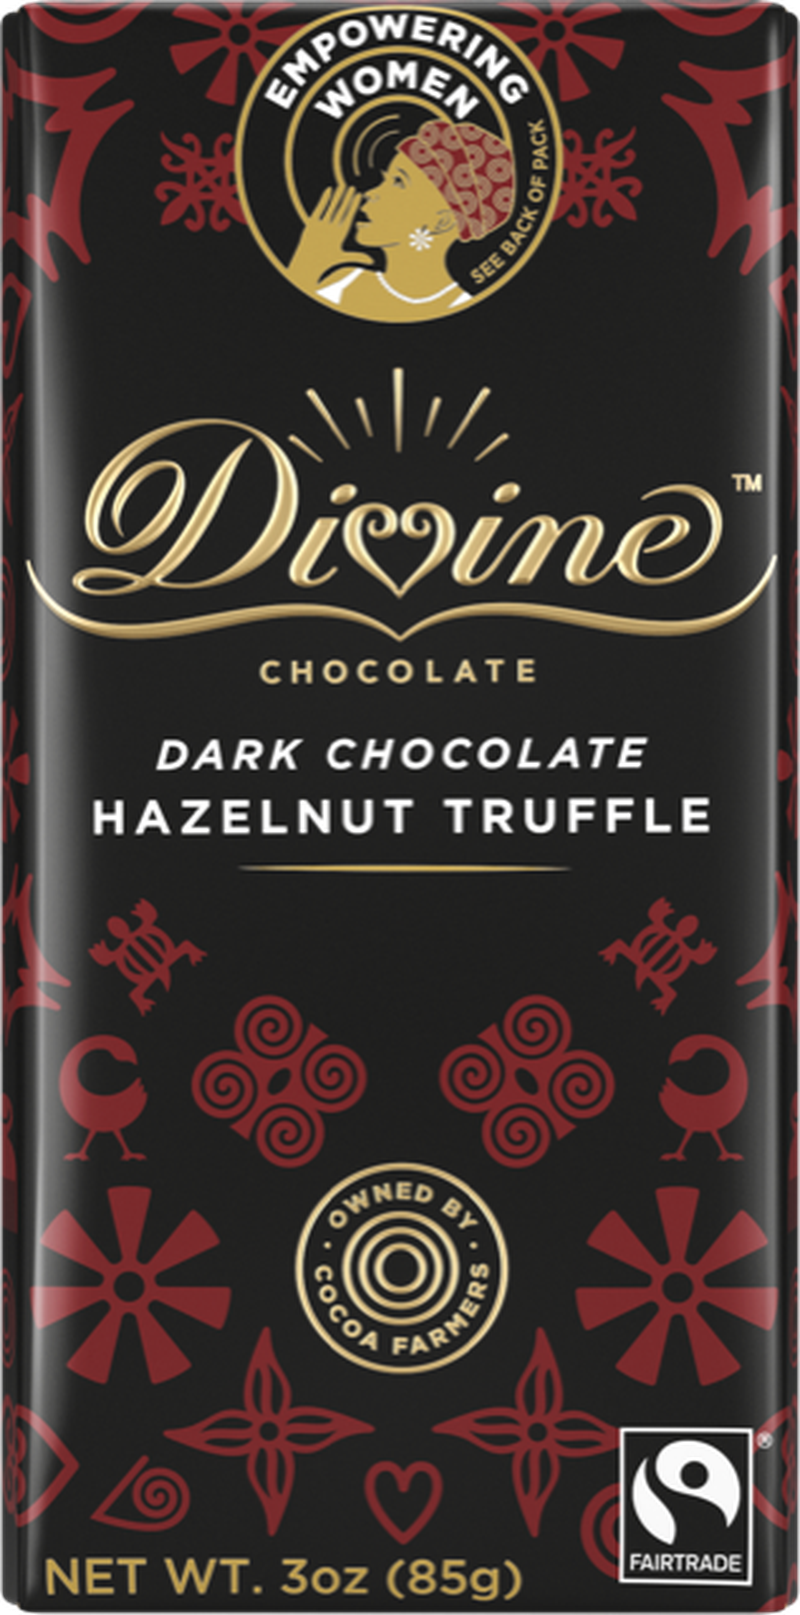 Dark Chocolate Hazelnut Truffle from Divine Chocolate